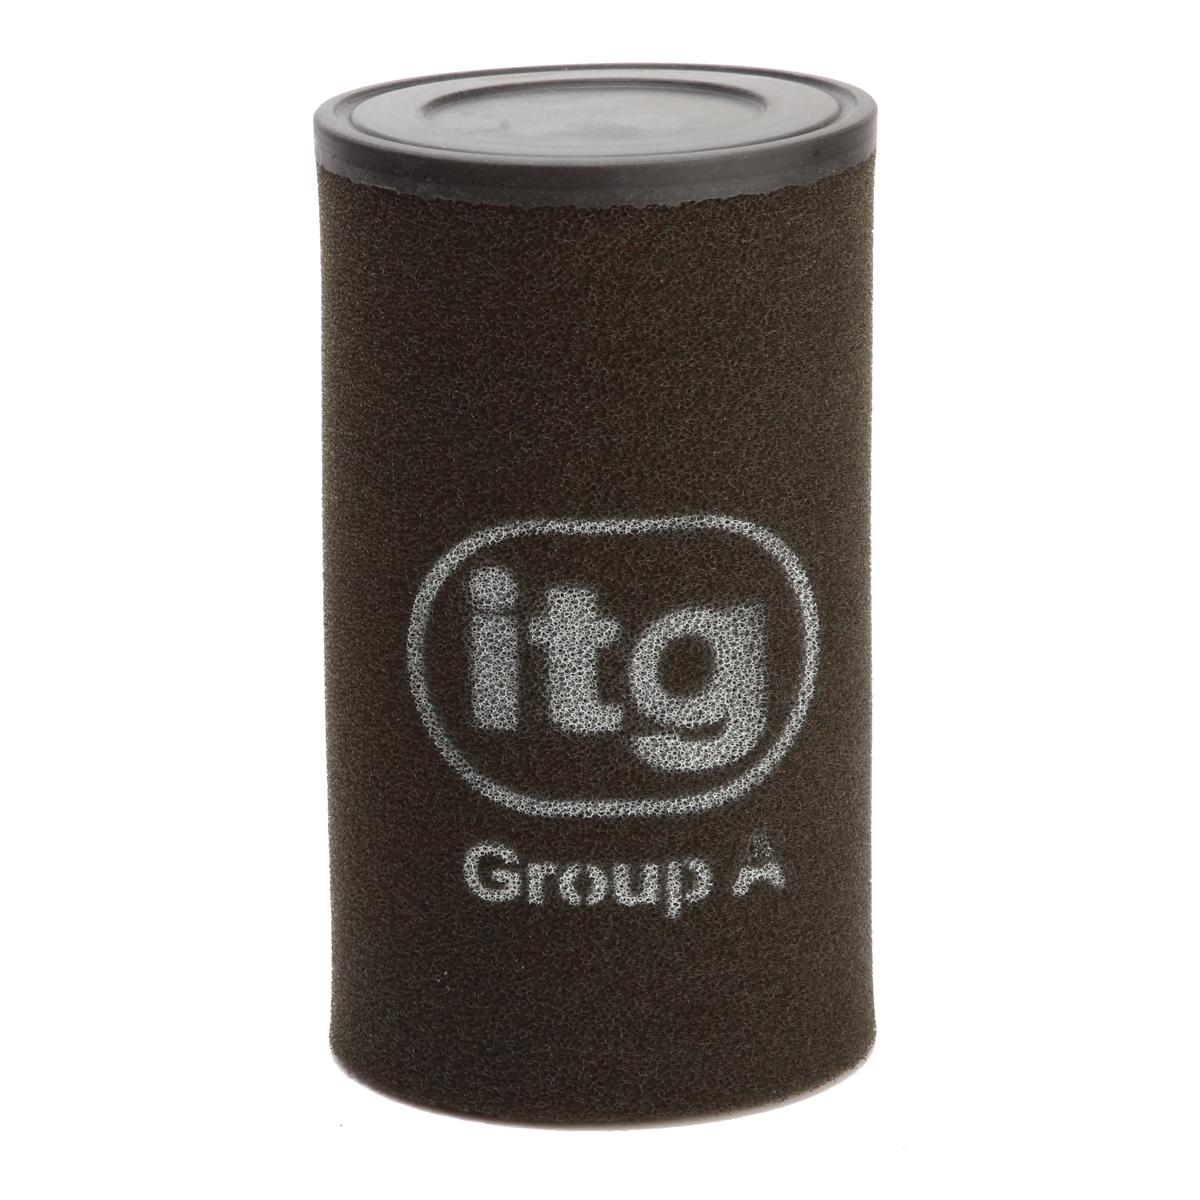 ITG Air Filter For Fiat Barchetta (09/95>)